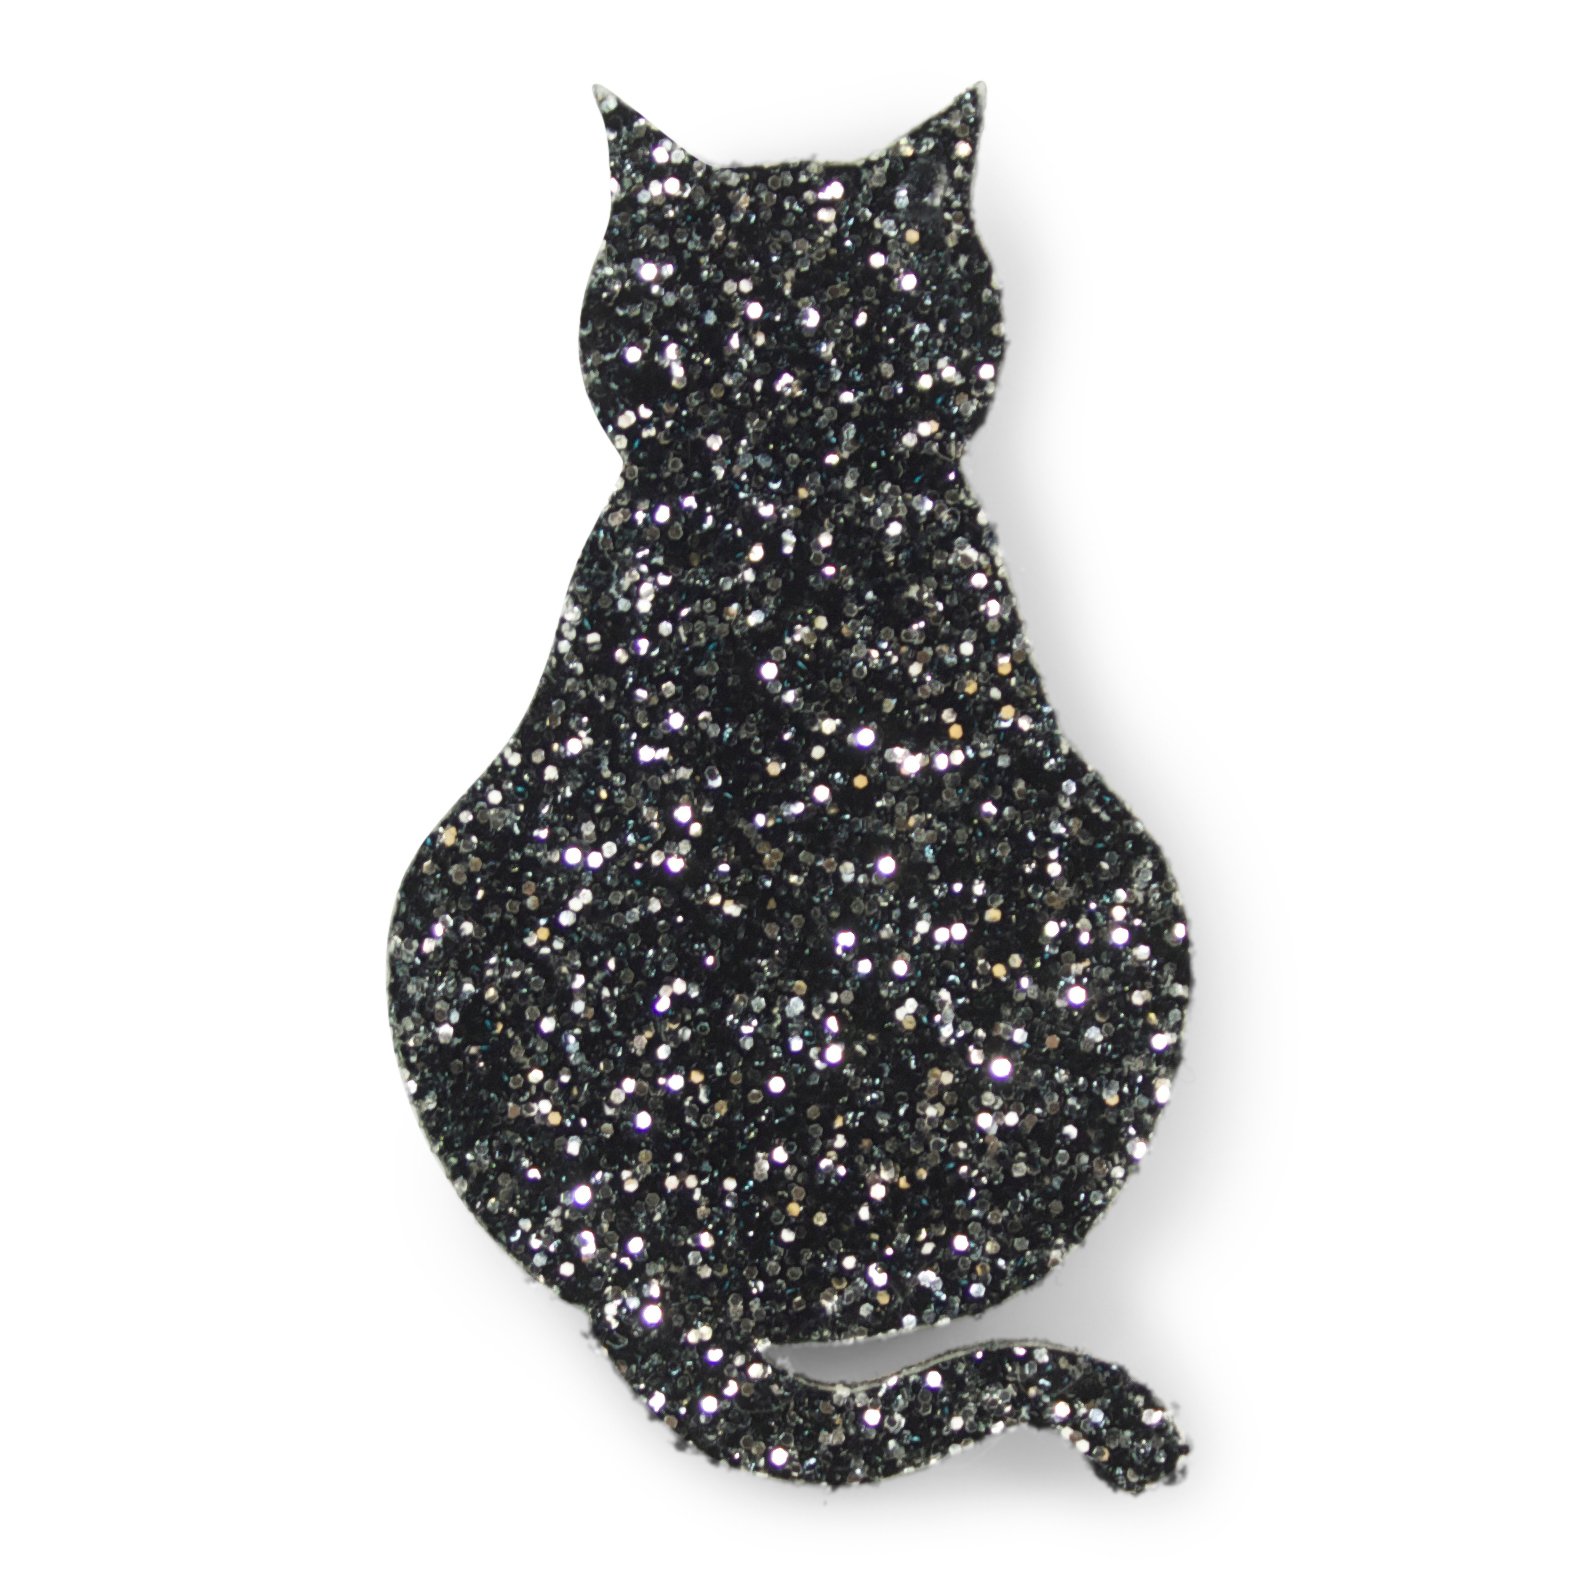 Black Cat Silhouette Ring/Brooch - Black Heart Creatives